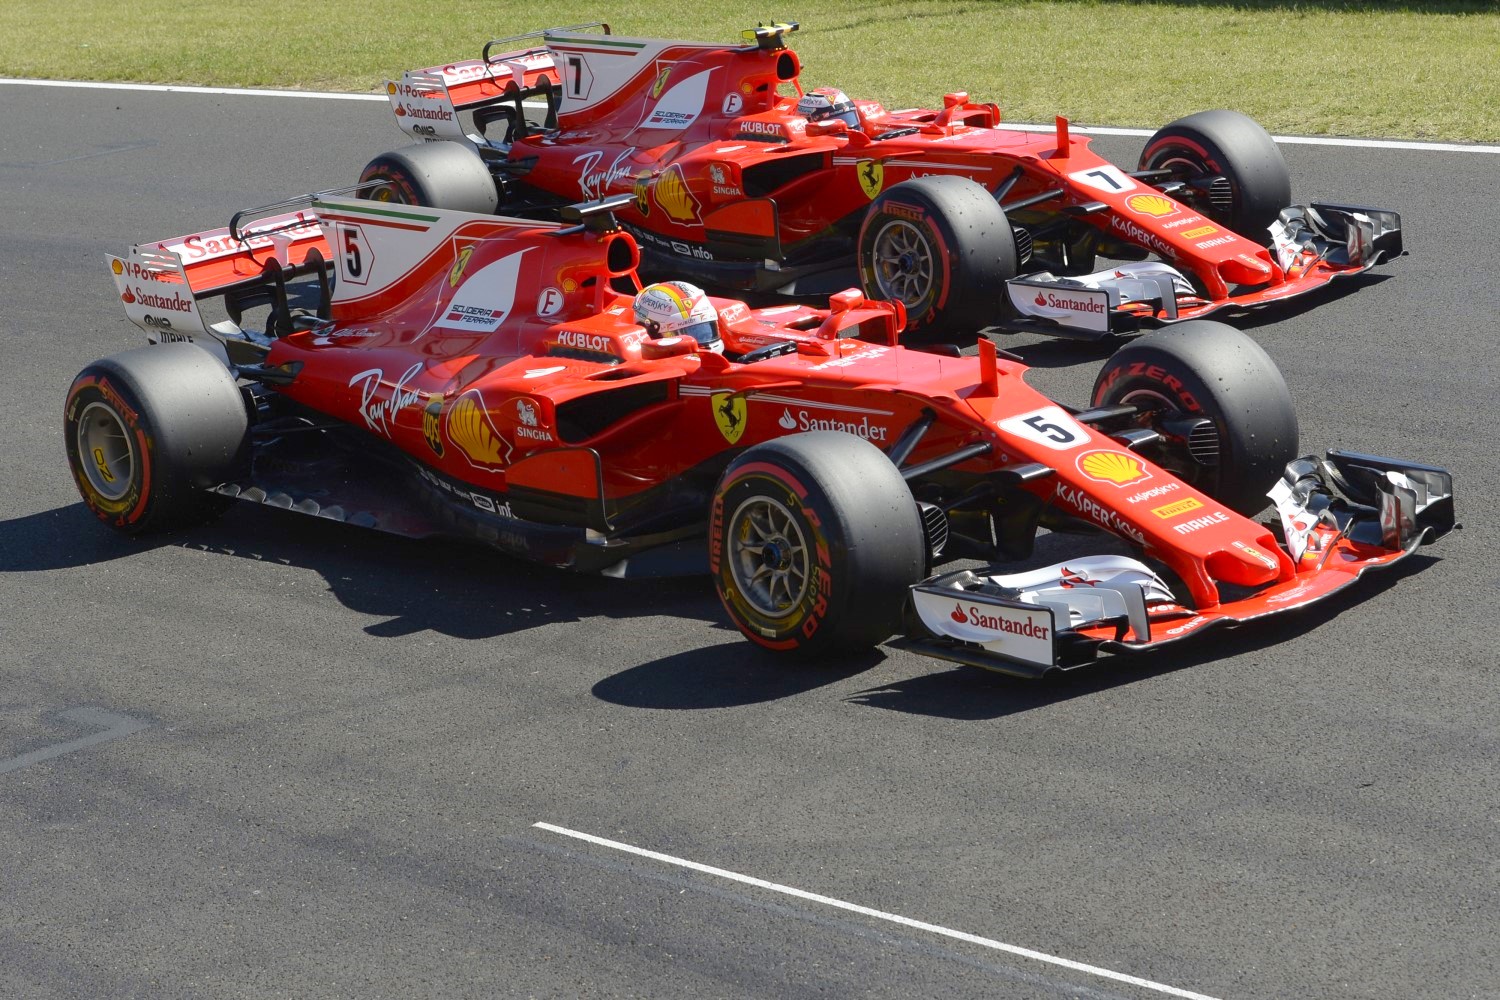 Vettel and Raikkonen 1-2